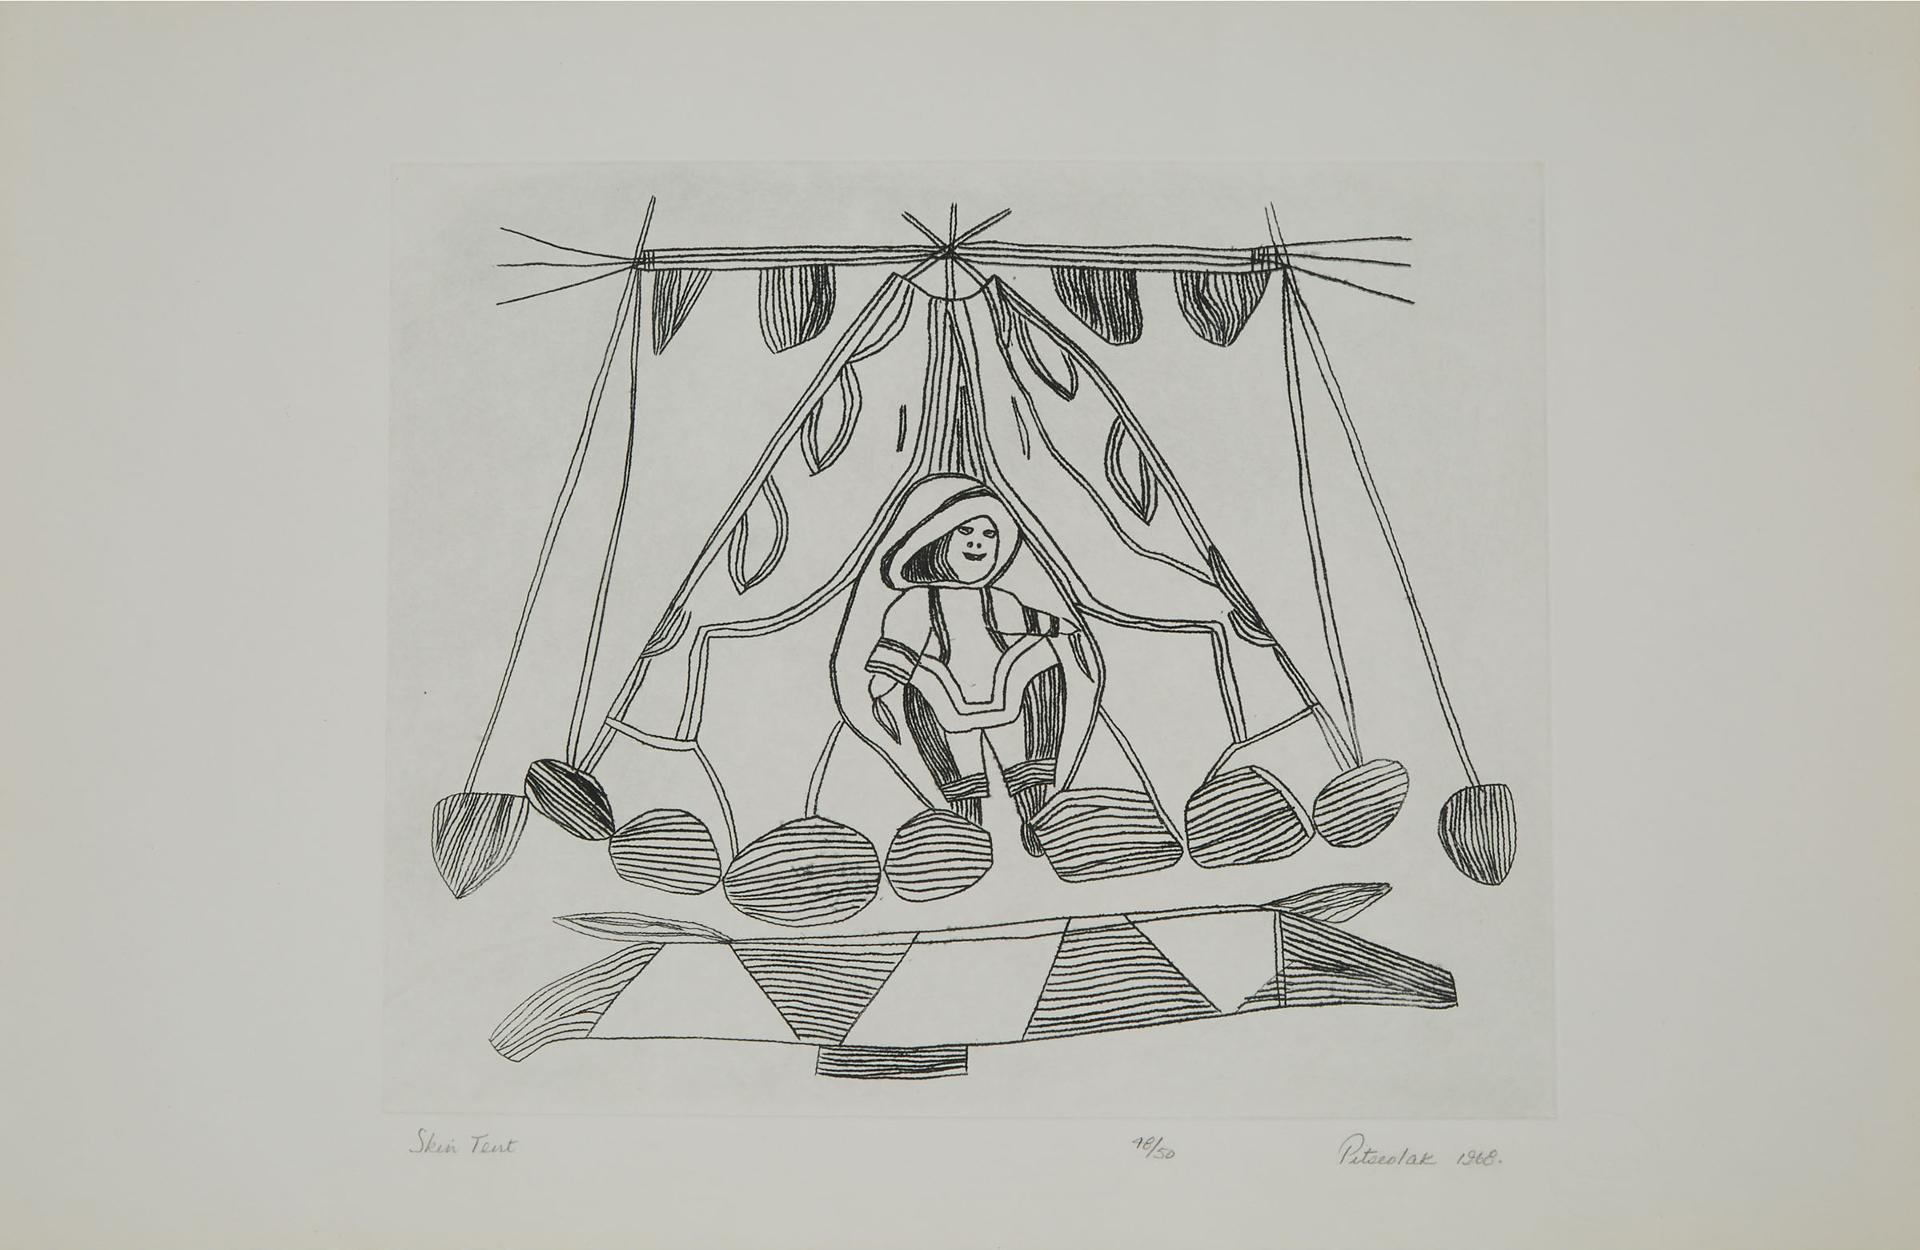 Pitseolak Ashoona (1904-1983) - Skin Tent